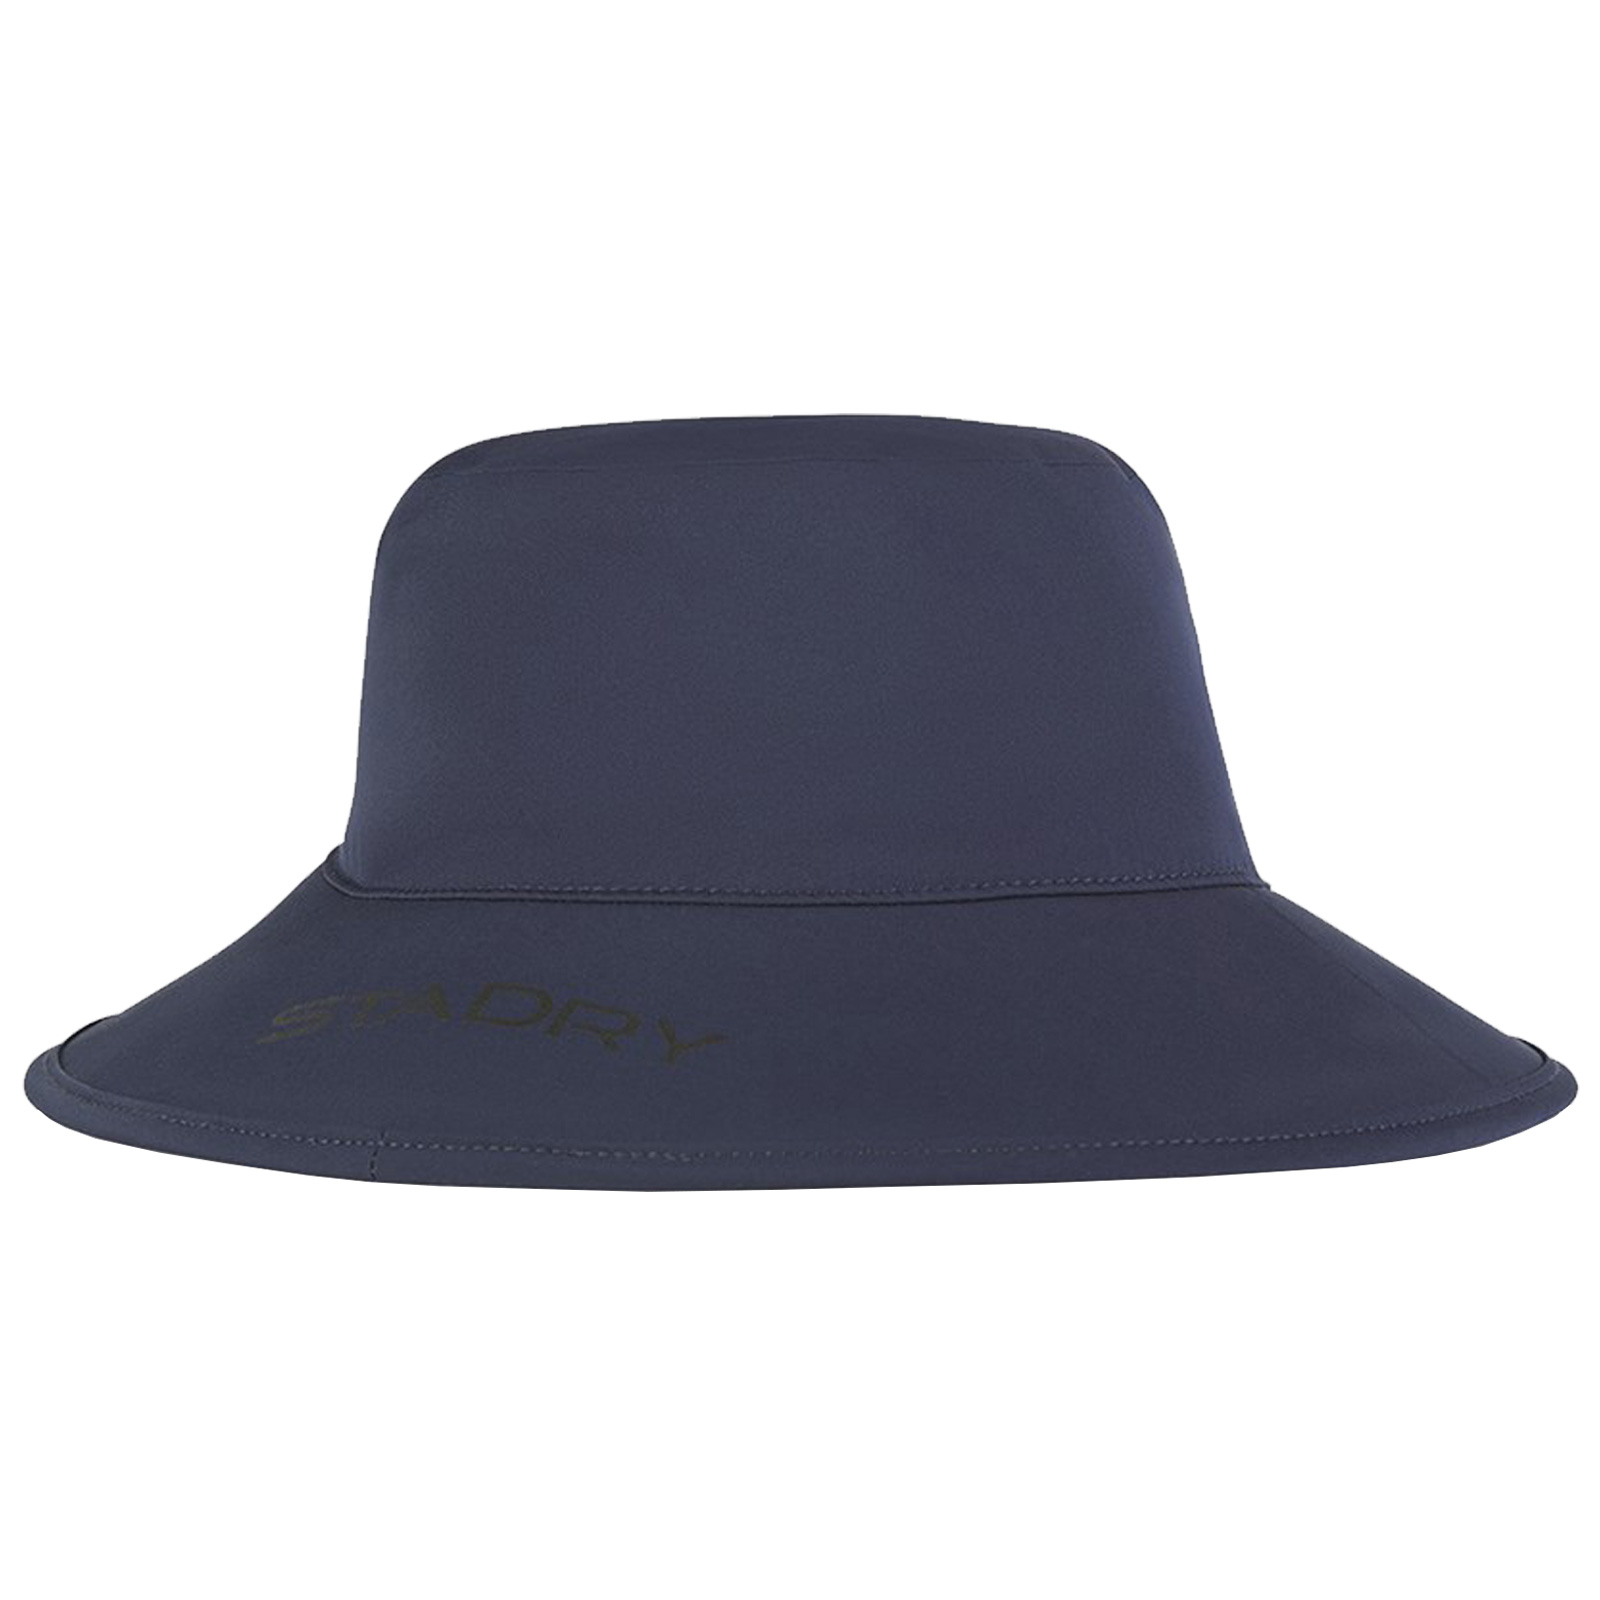 2020 Titleist Mens StaDry Waterproof Bucket Hat Lightweight Golf Cap | eBay